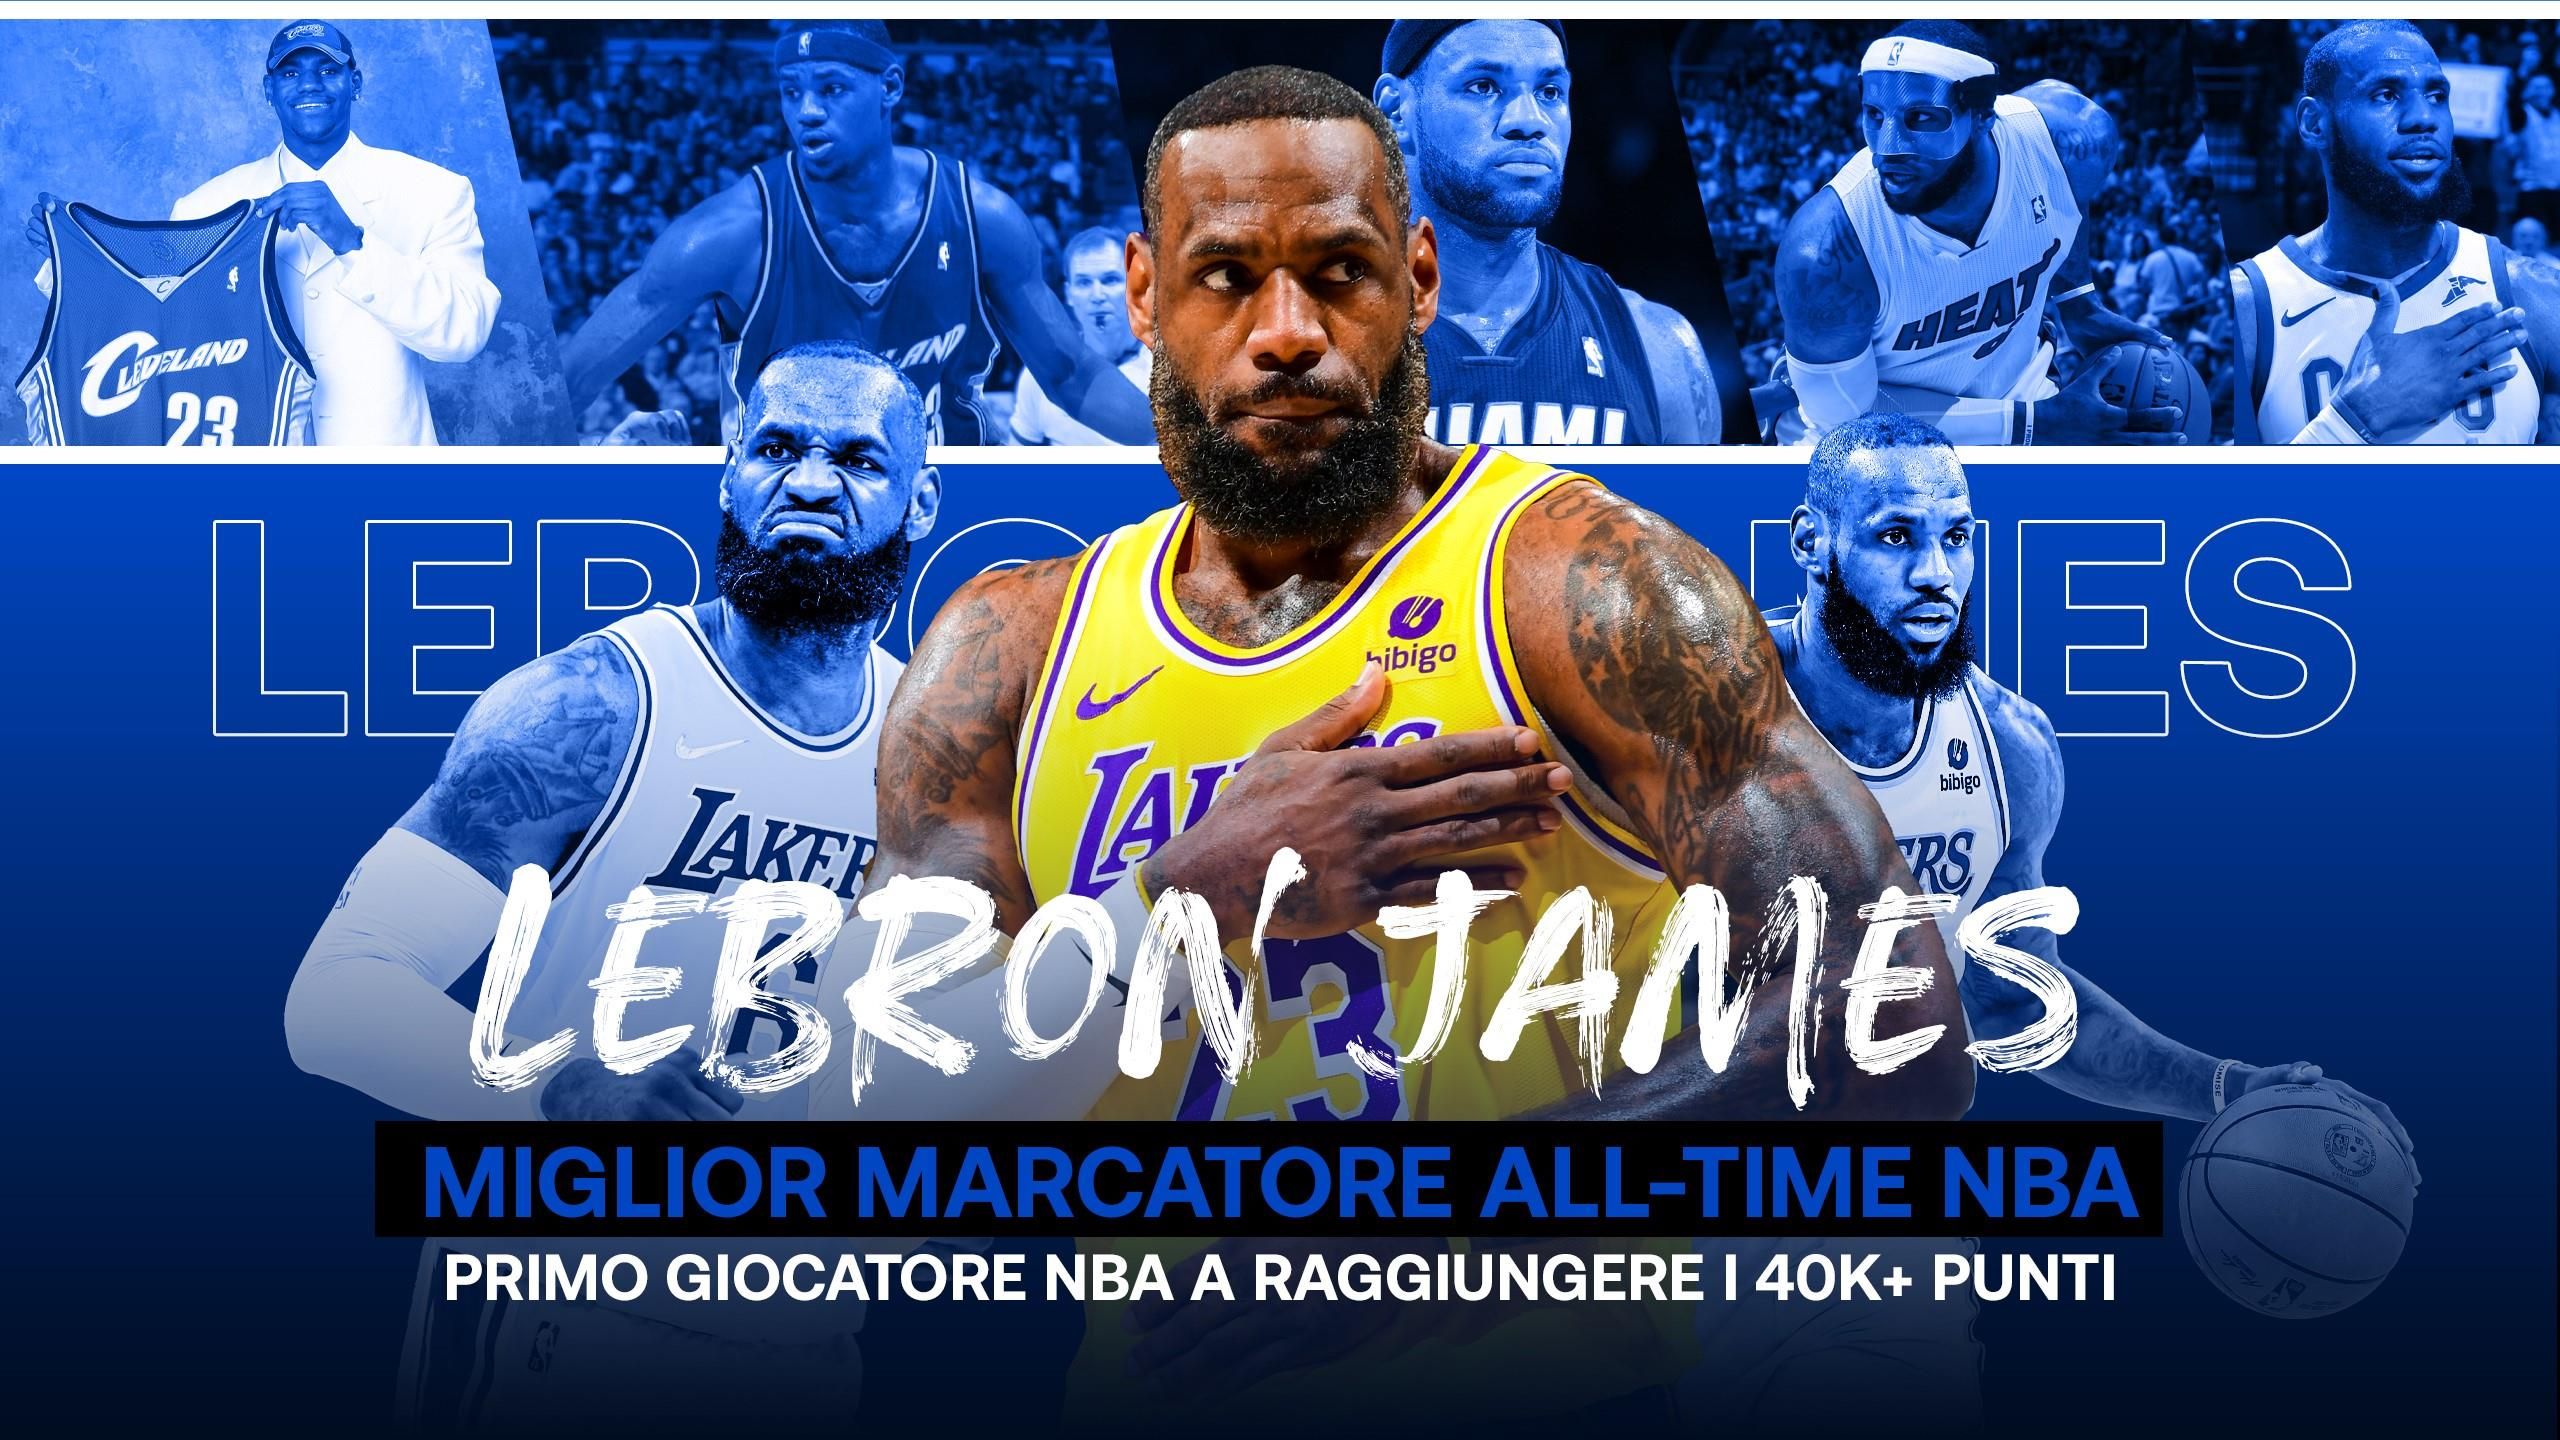 La strada di LeBron James verso i 40mila punti: dall'ingresso in NBA al sorpasso a Jordan, a Kobe e a Kareem. Le tappe - Eurosport